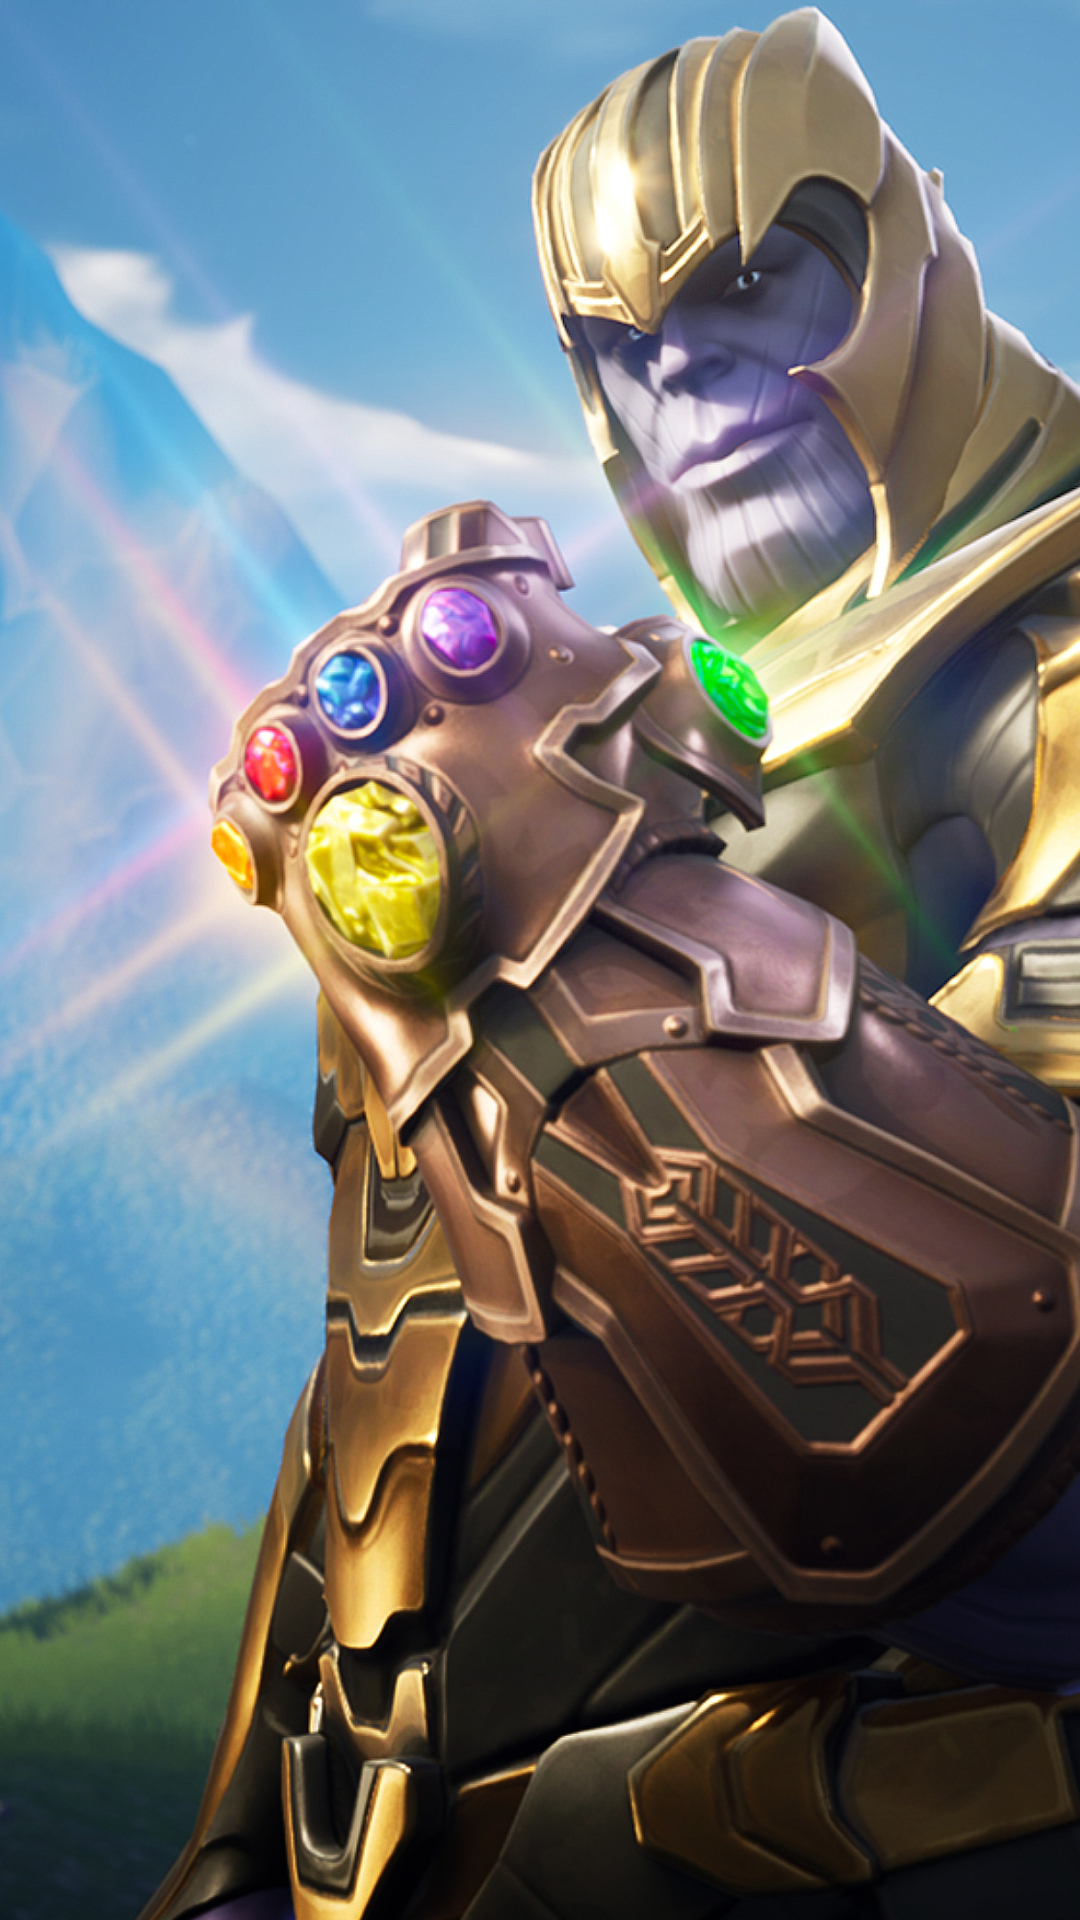 Download Thanos In Fortnite Battle Royale 1280x2120 ... - 1080 x 1920 jpeg 438kB